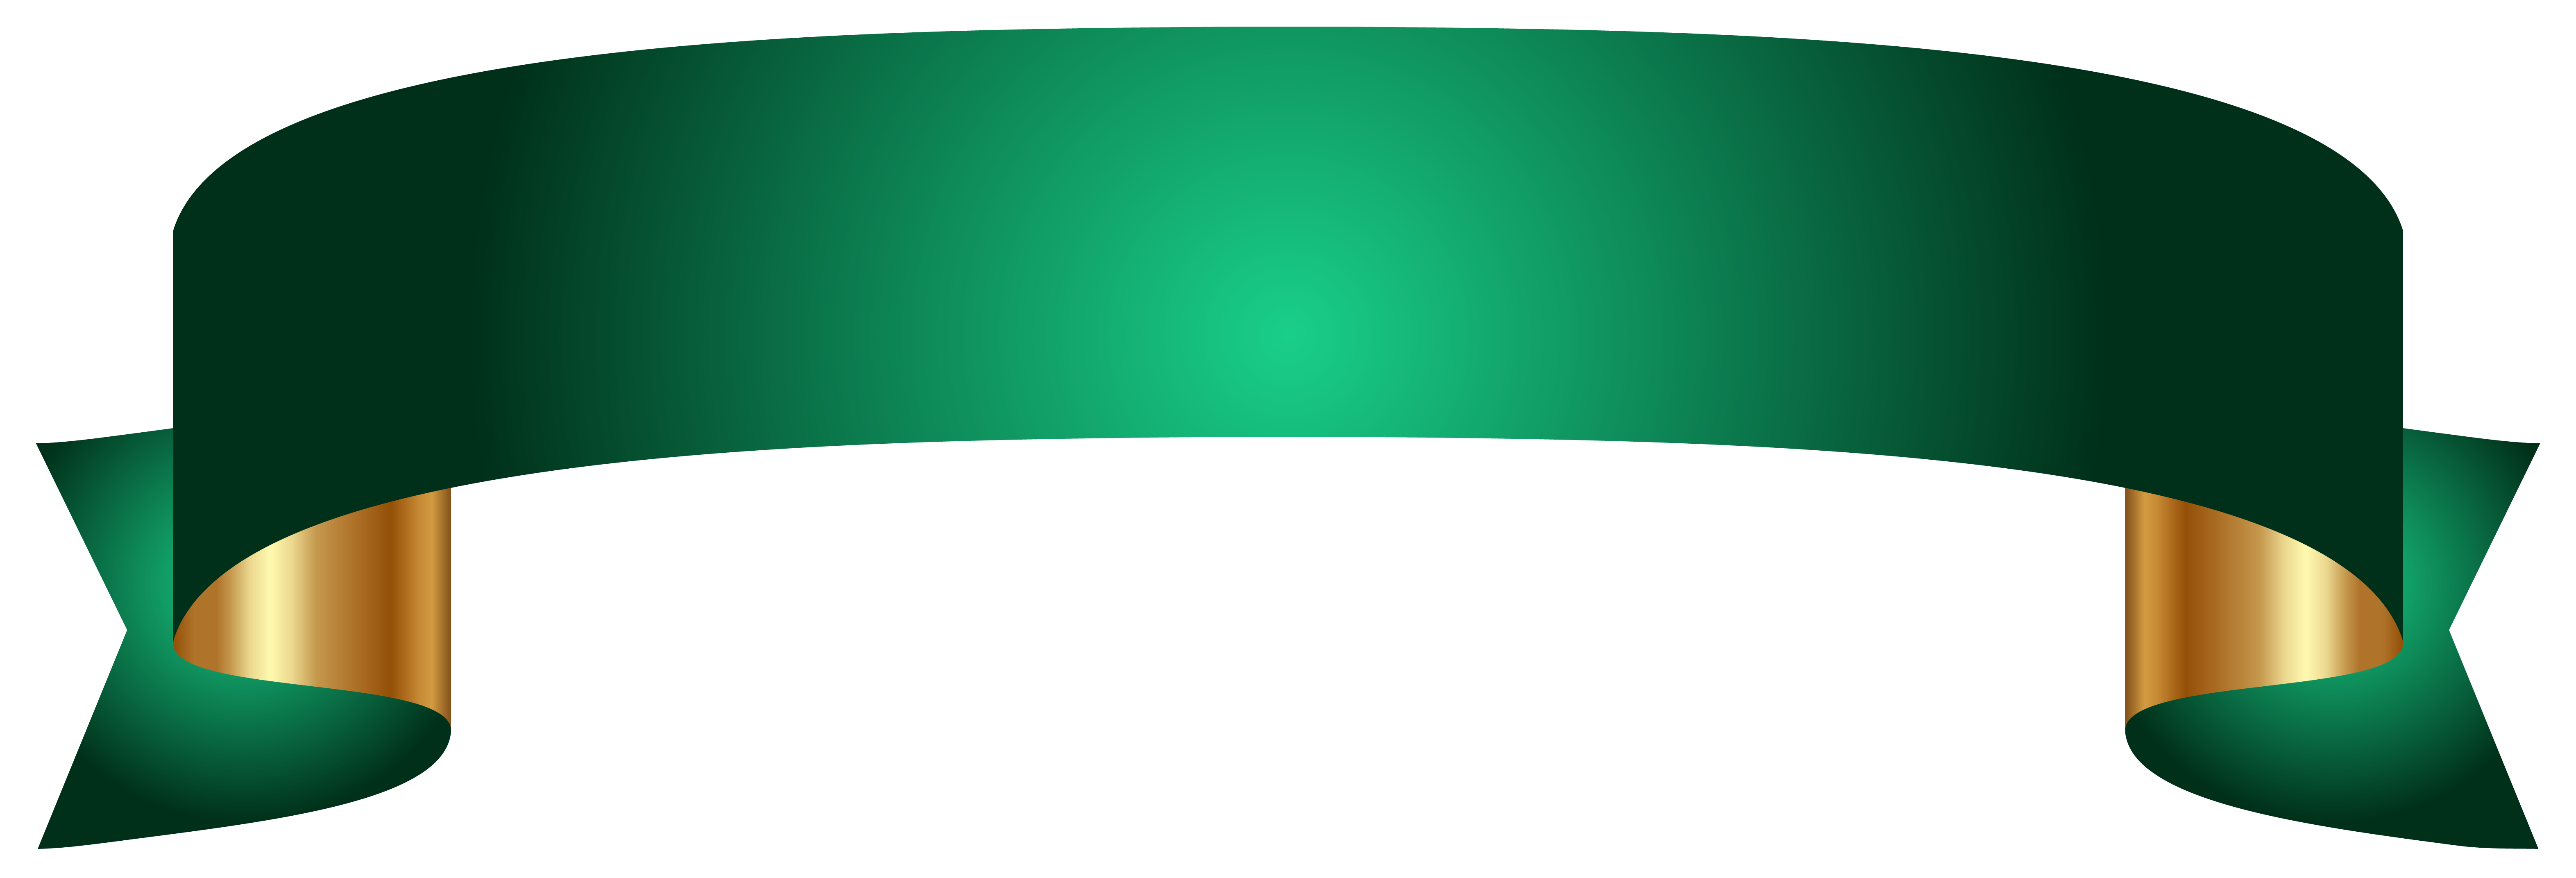 Immagine PNG di banner verde